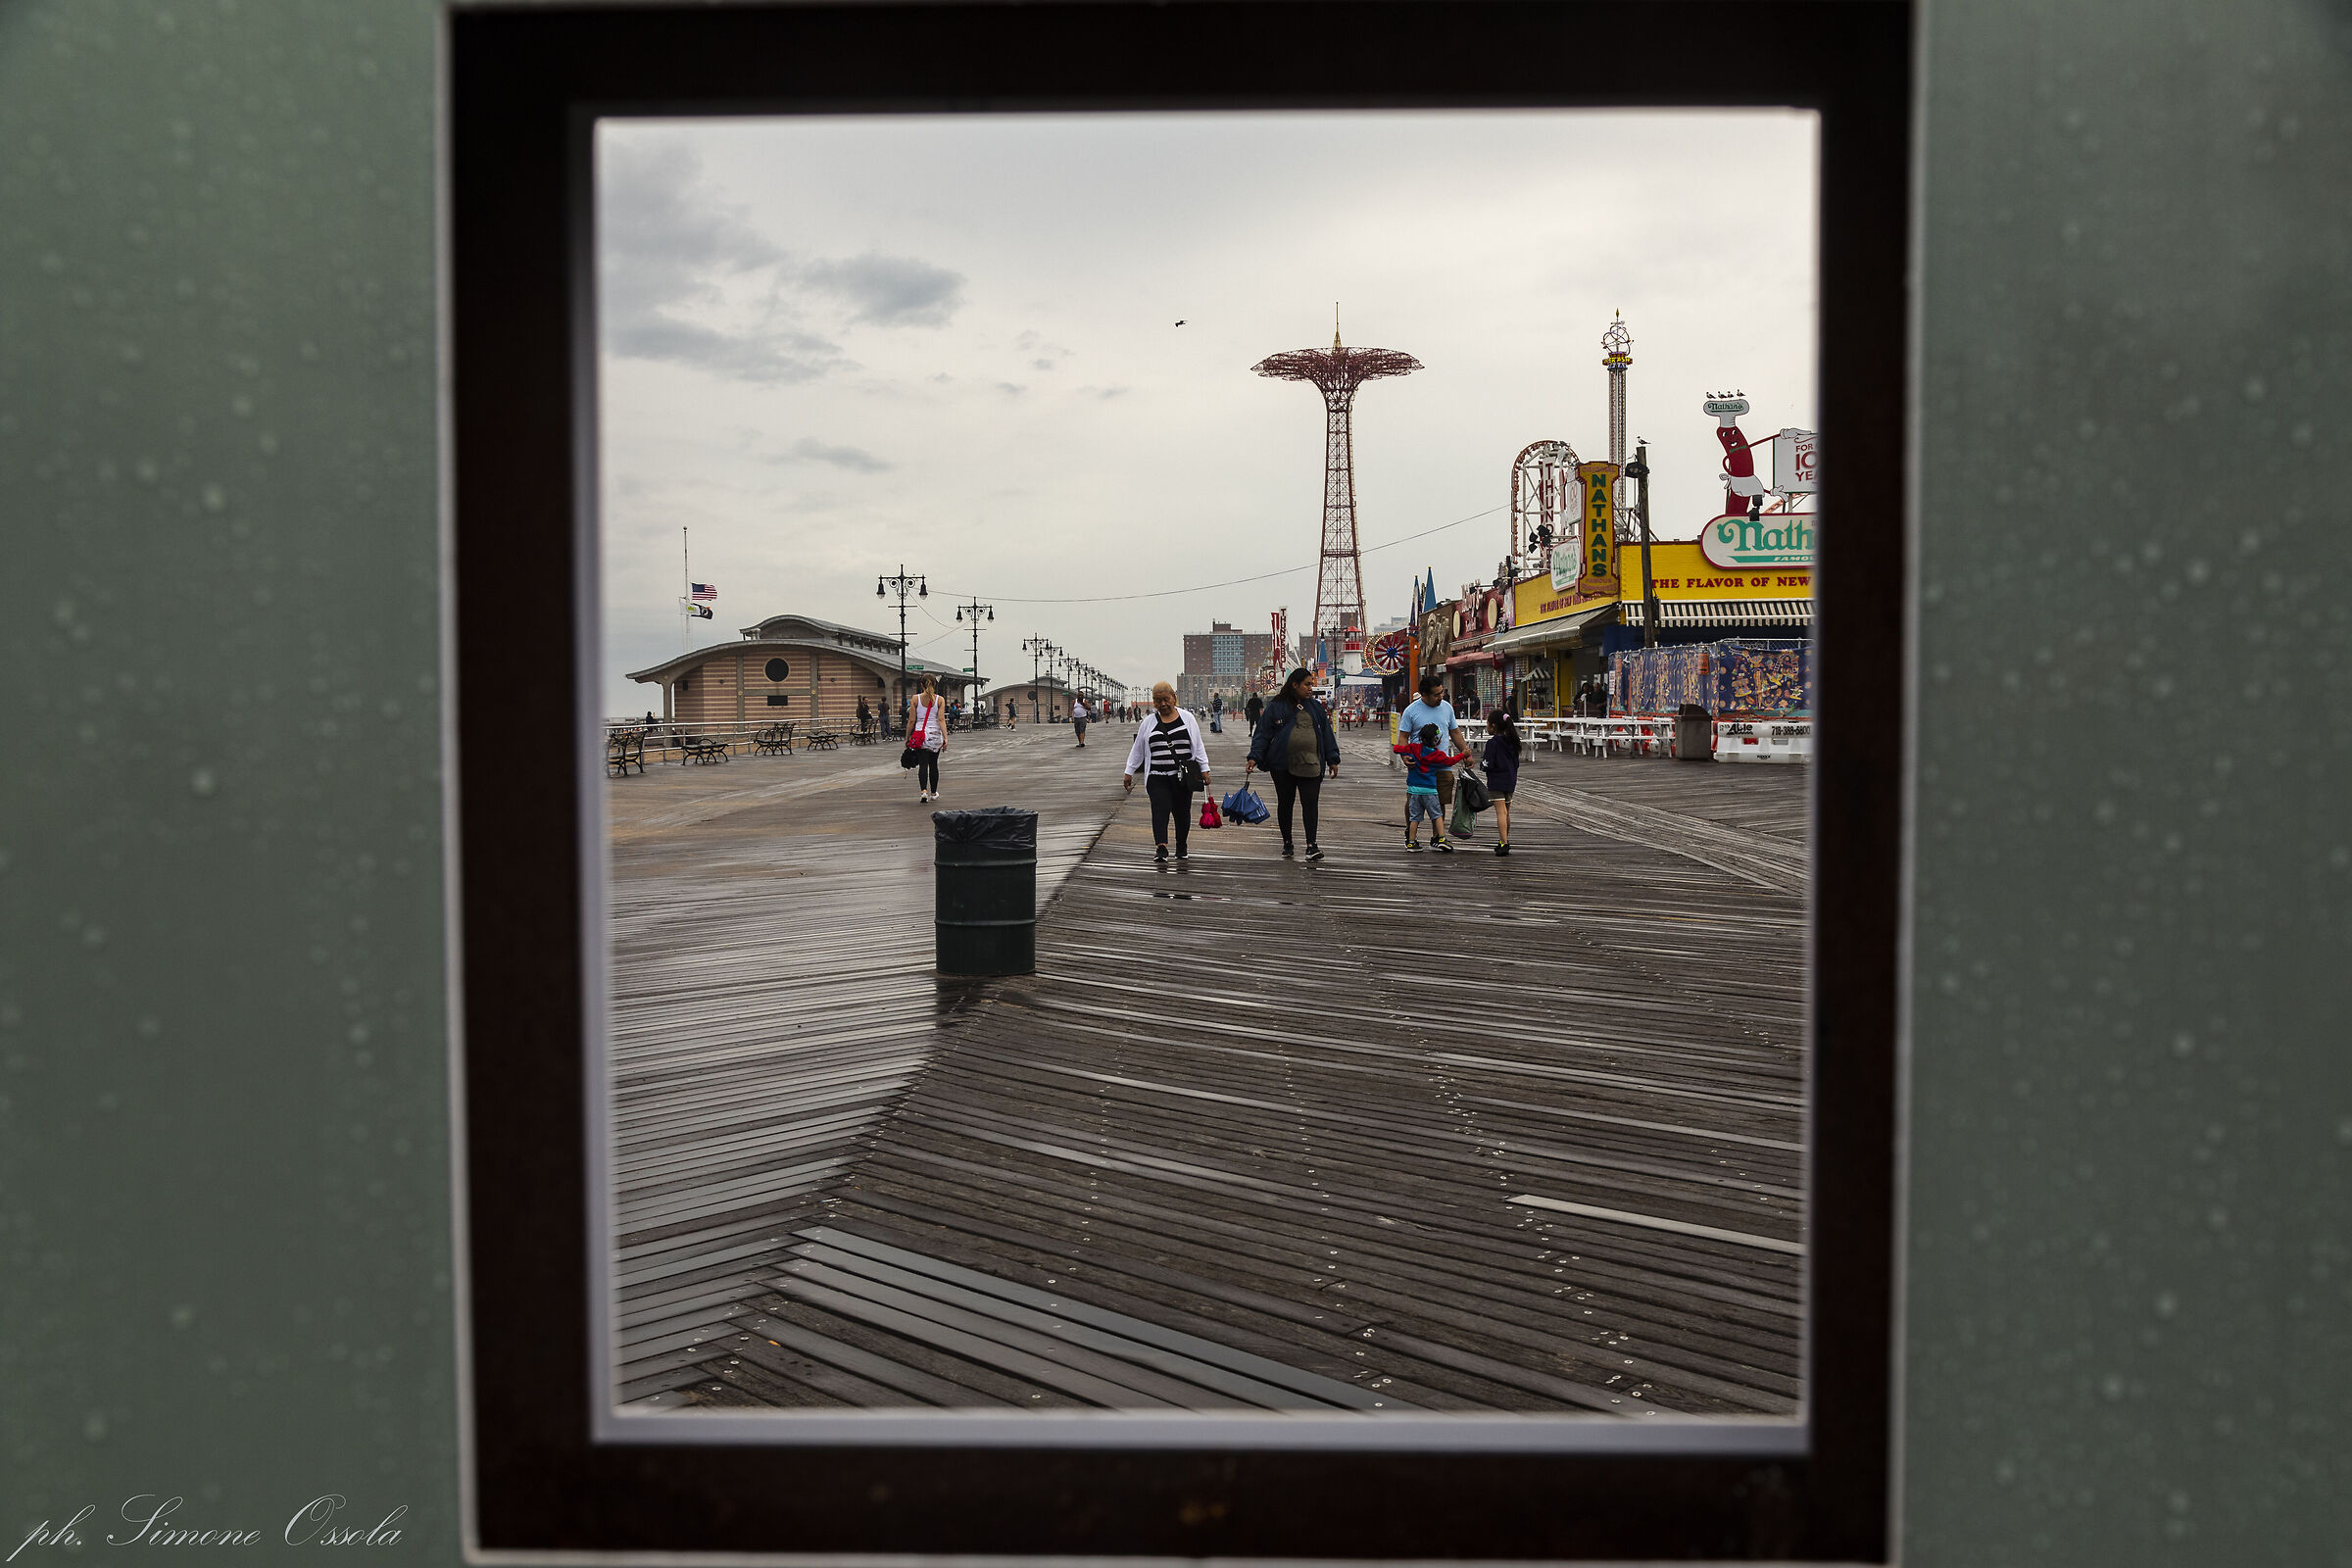 Coney Island framed...